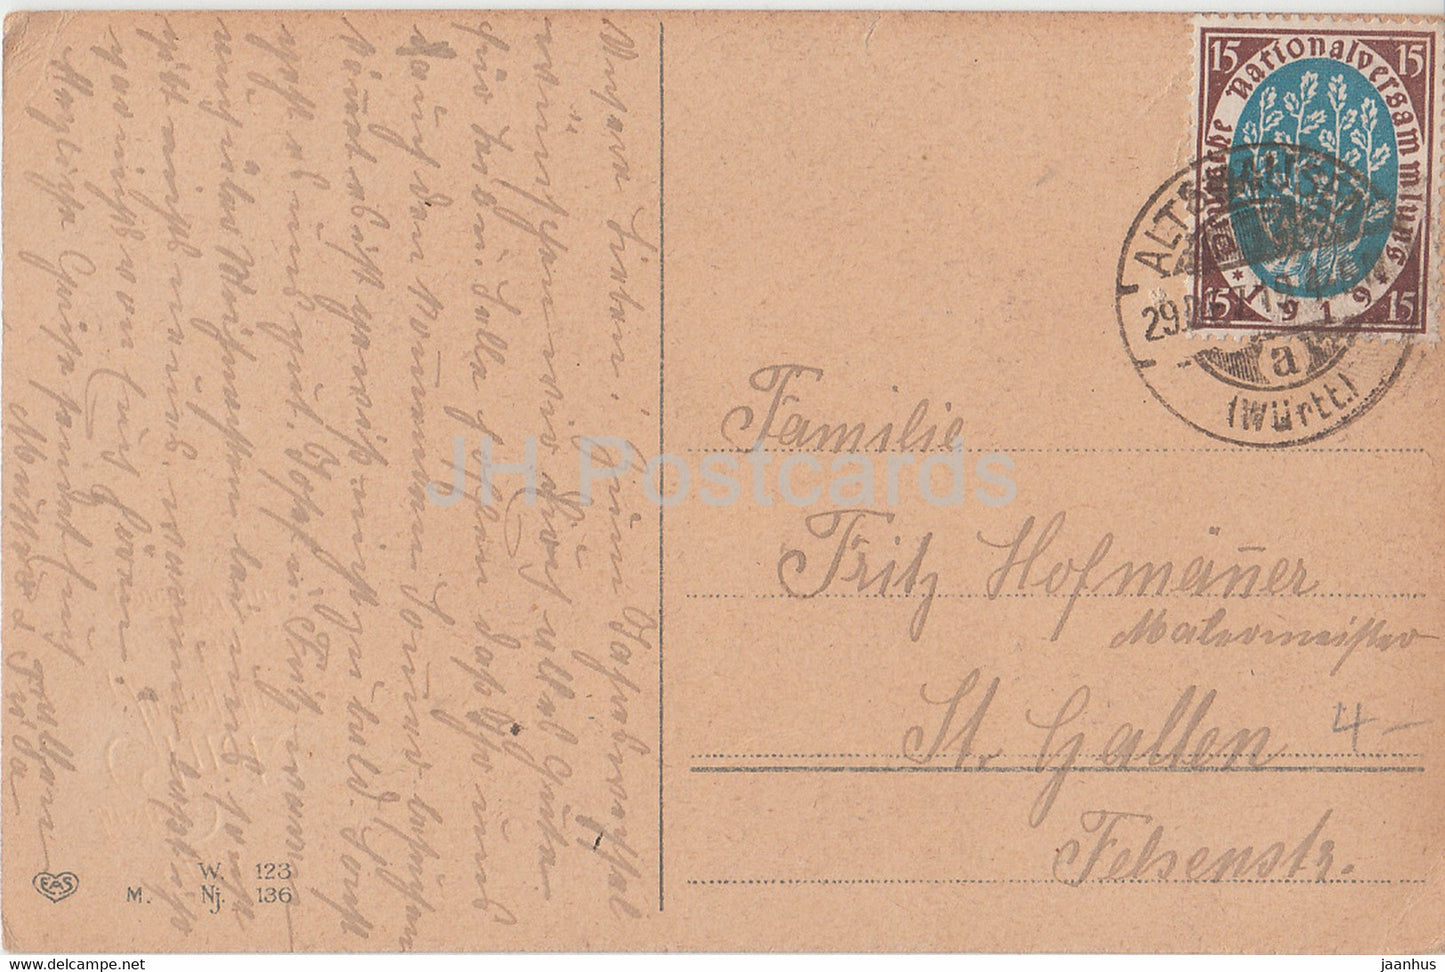 New Year Greeting Card - Die Gluckwunsche zum Neuen Jahre - town view - EAS 136 - old postcard - 1919 - Germany - used